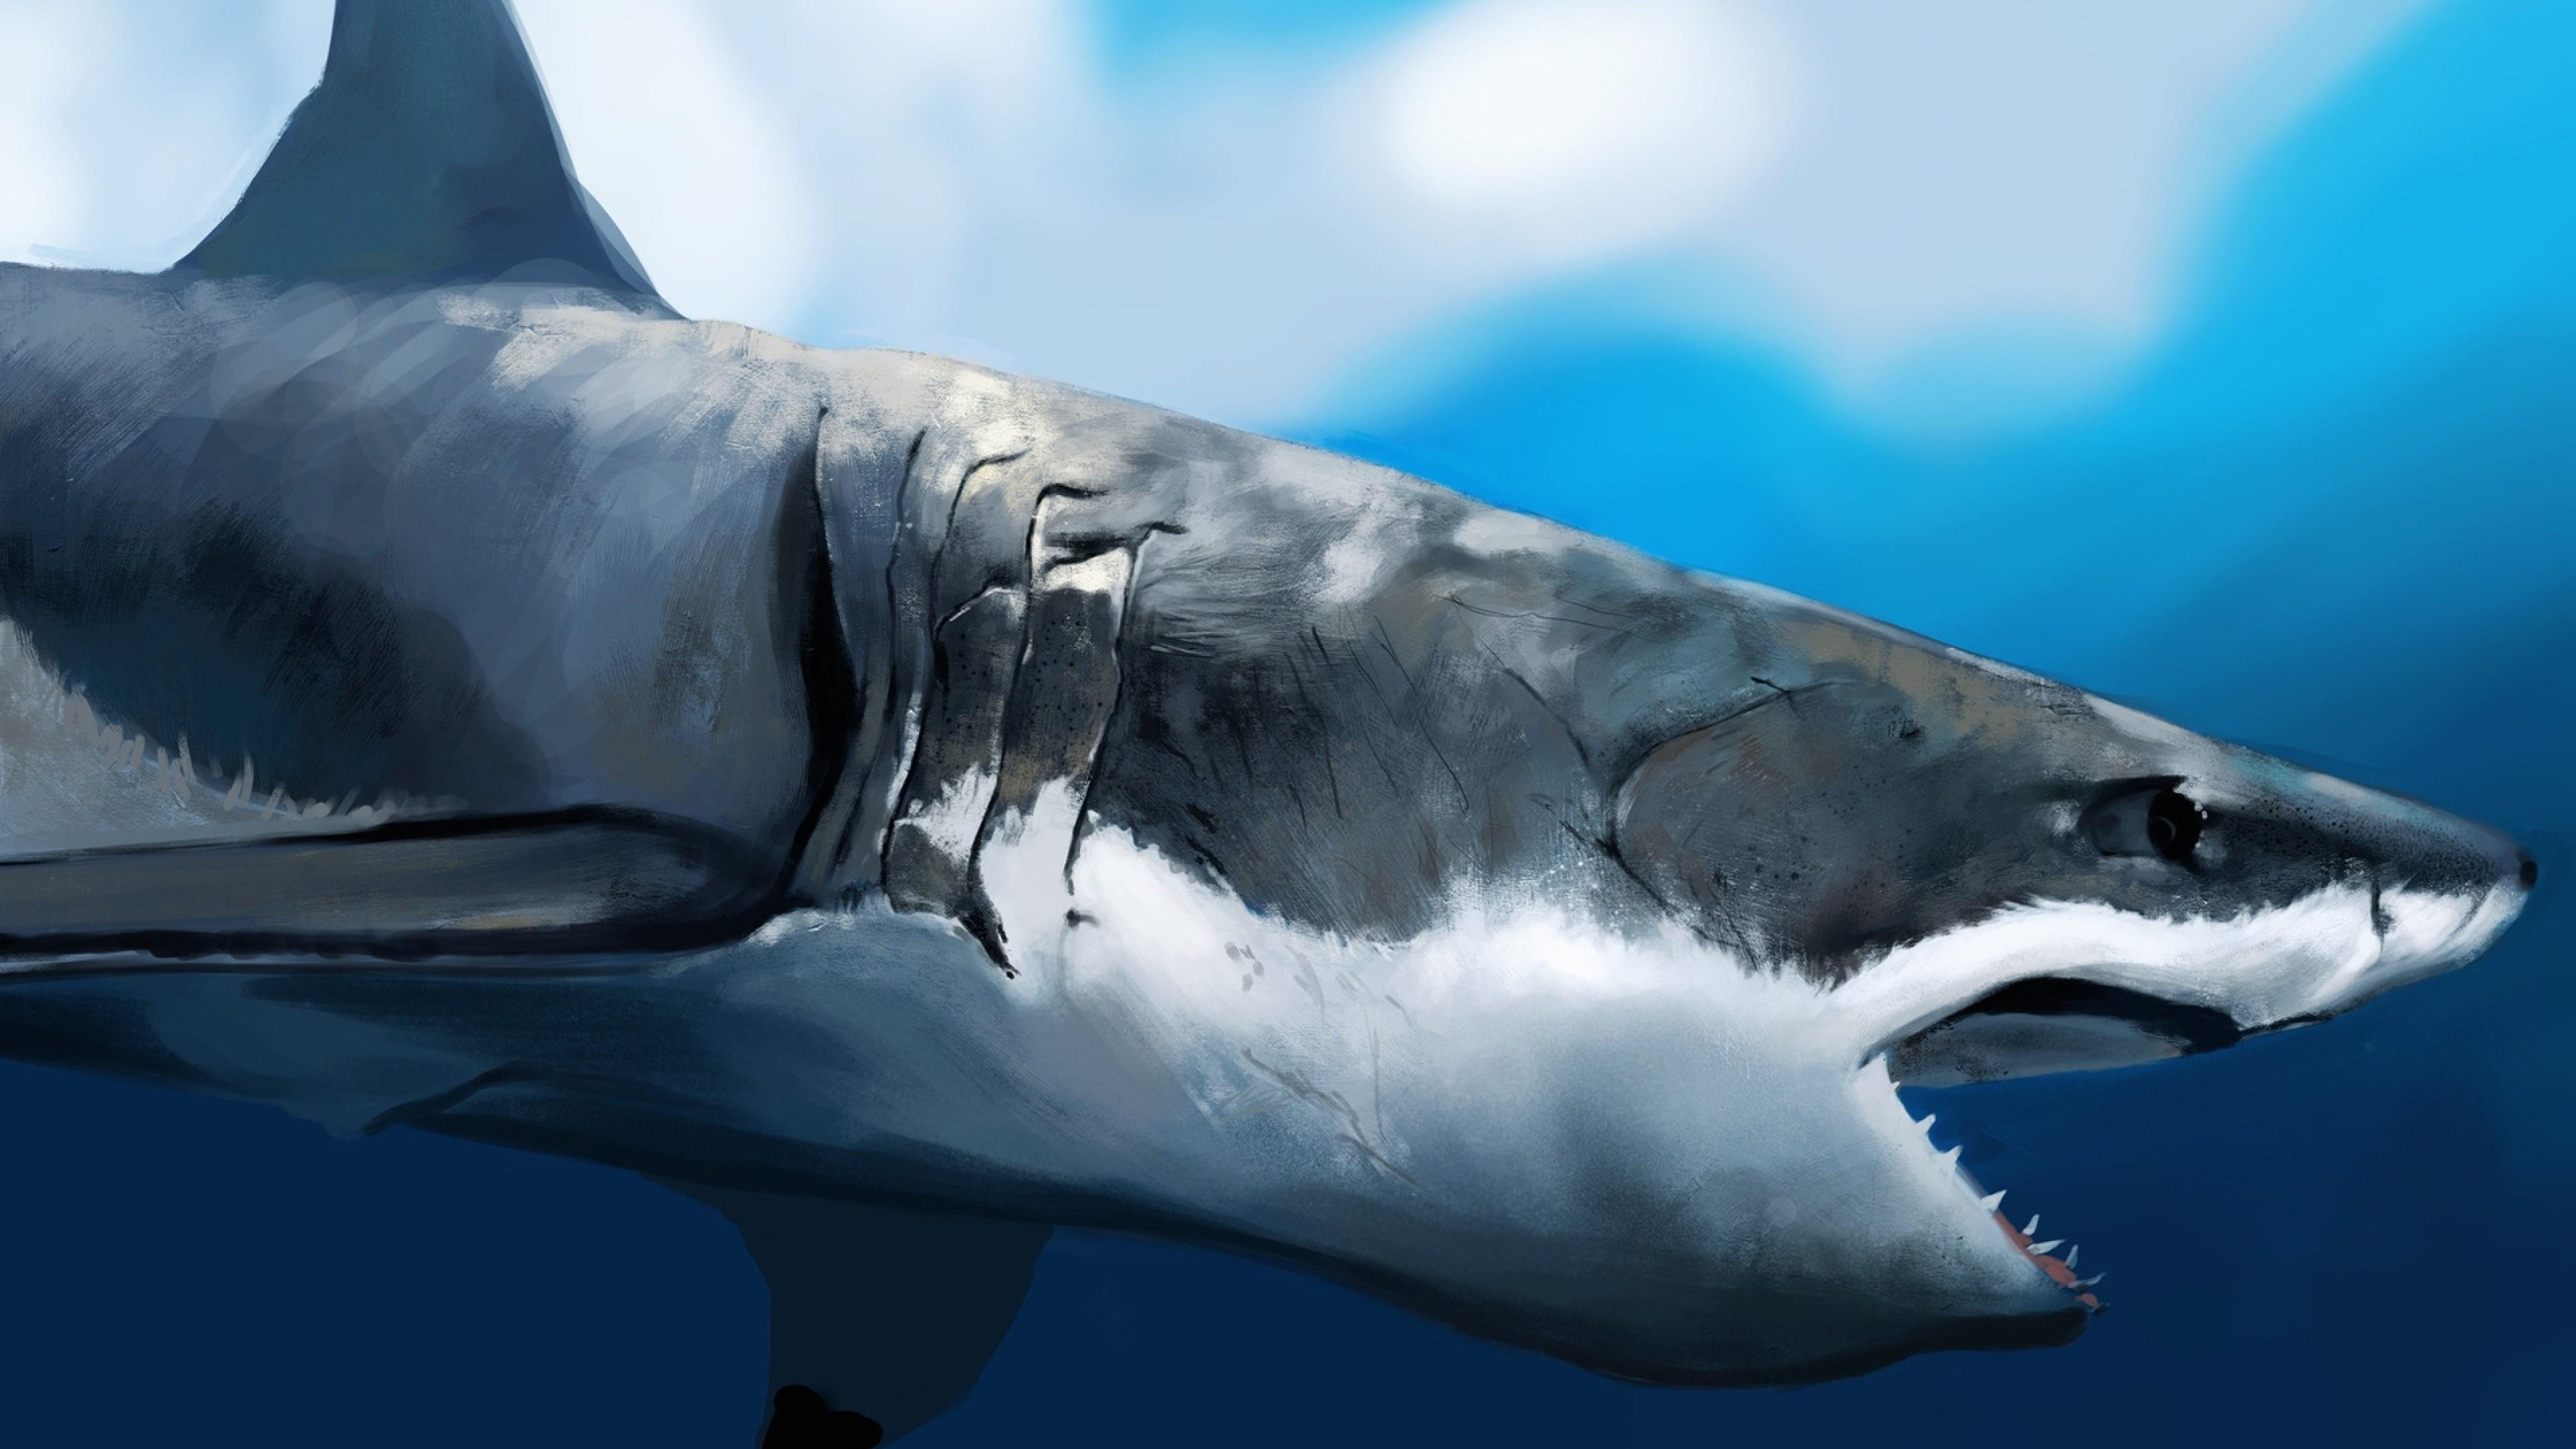 Great White Shark Art 4K UltraHD Wallpaper. Wallpaper